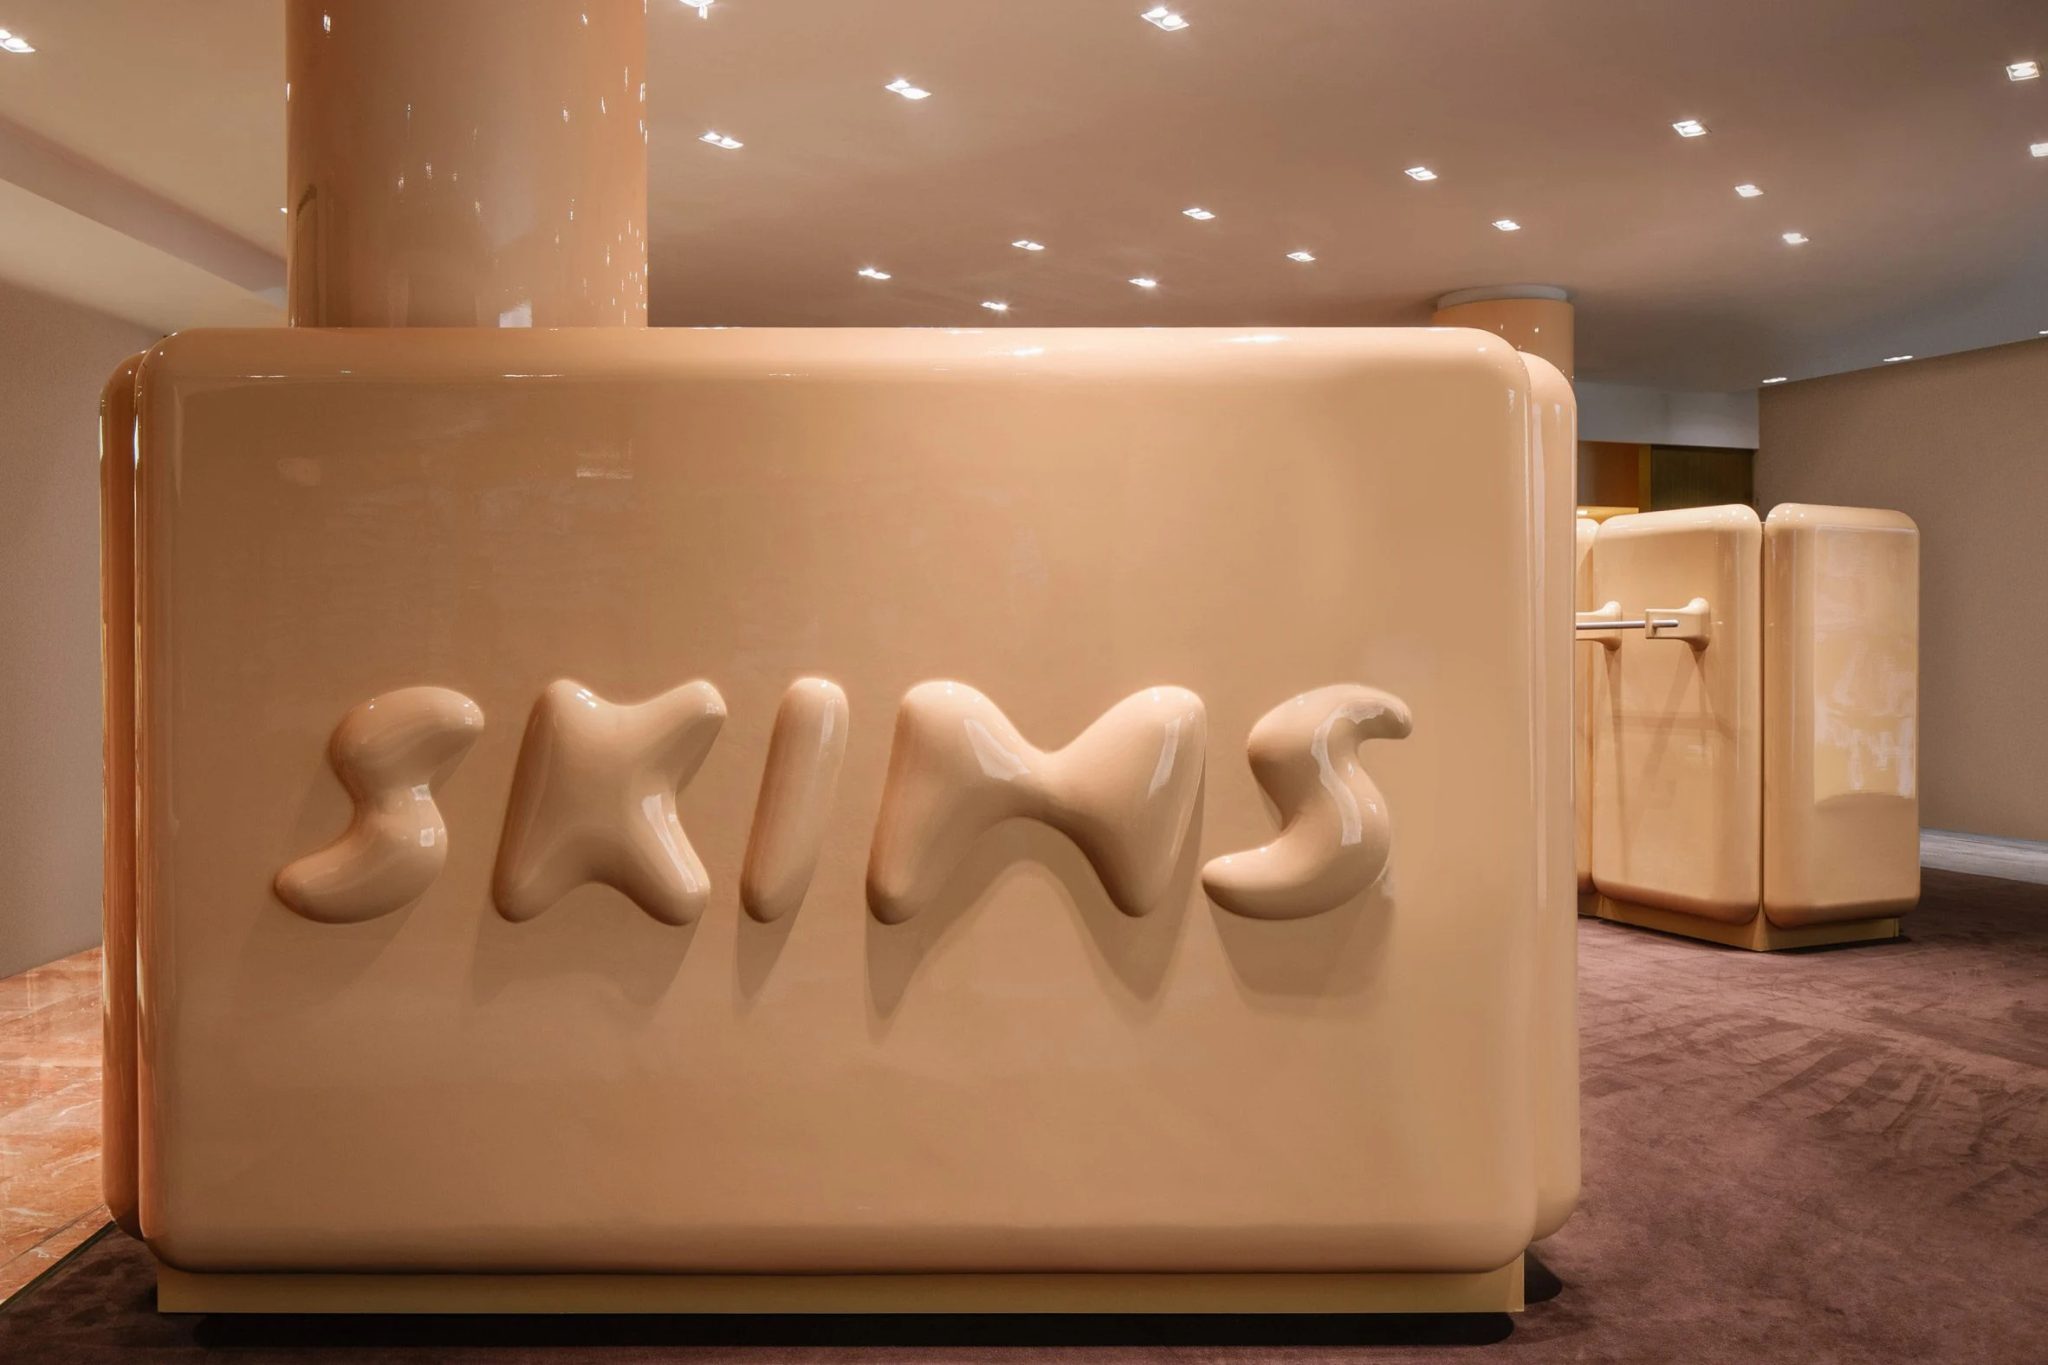 Kim Kardashian's Skims Is Opening Its First Stores Next Year - BNN